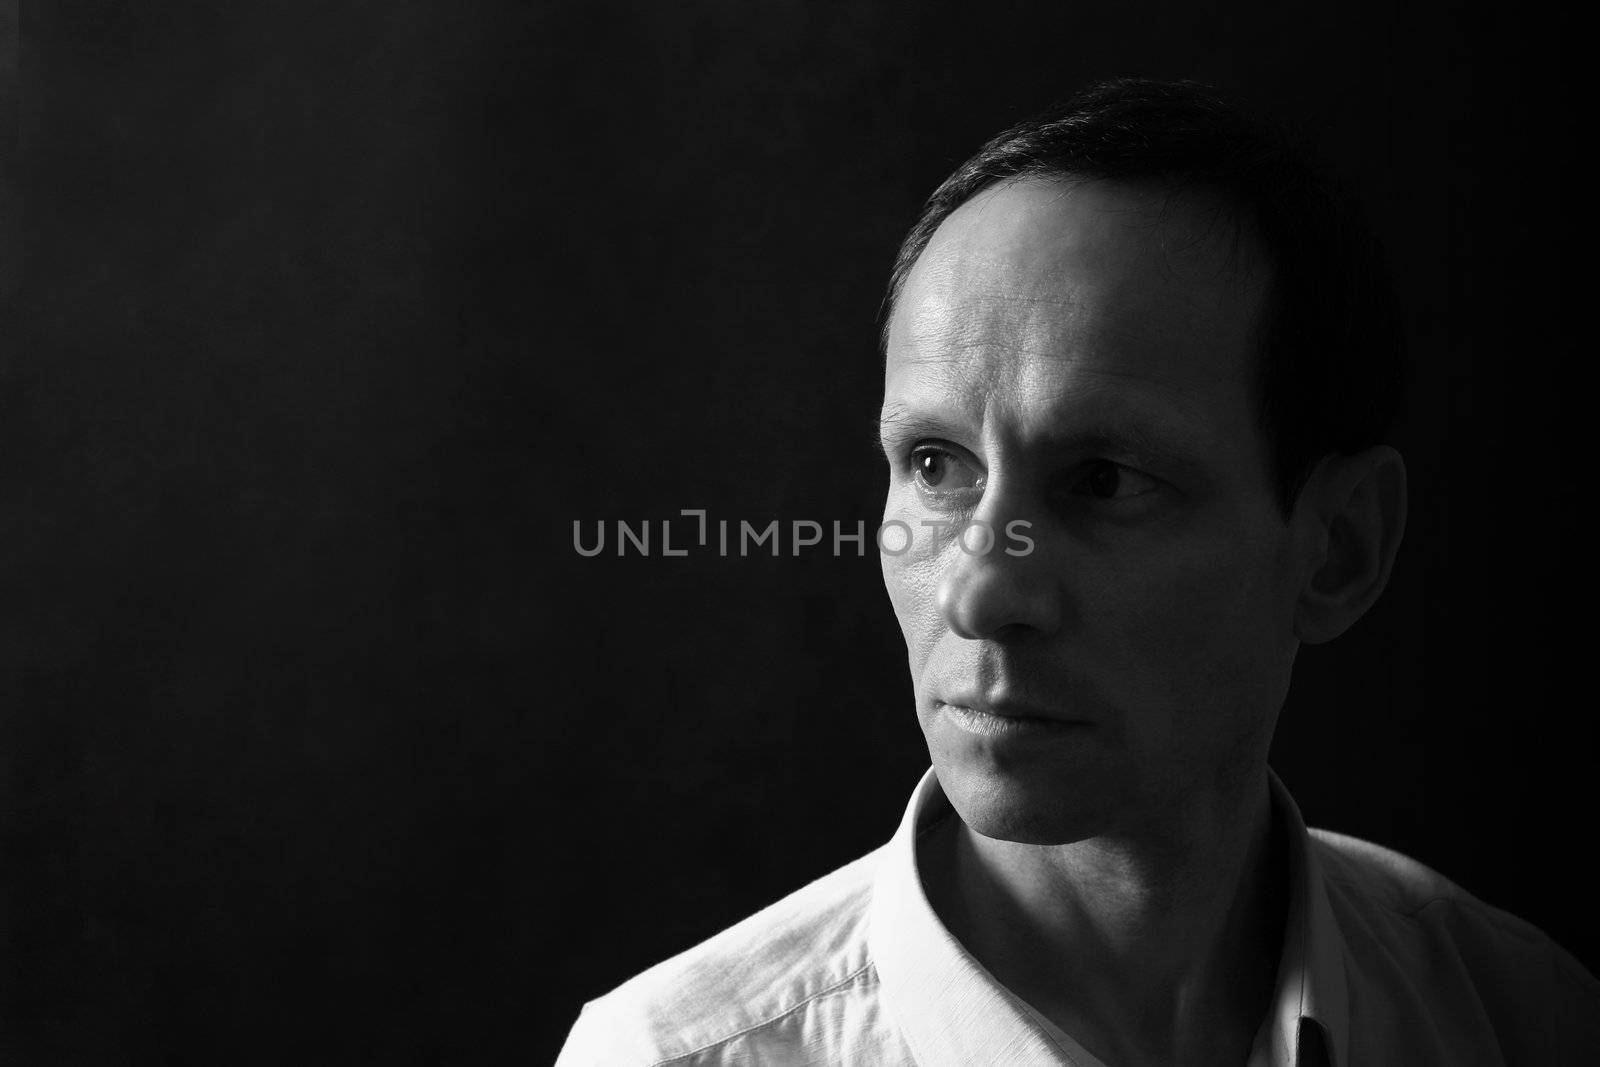 Portrait of the man on a dark background